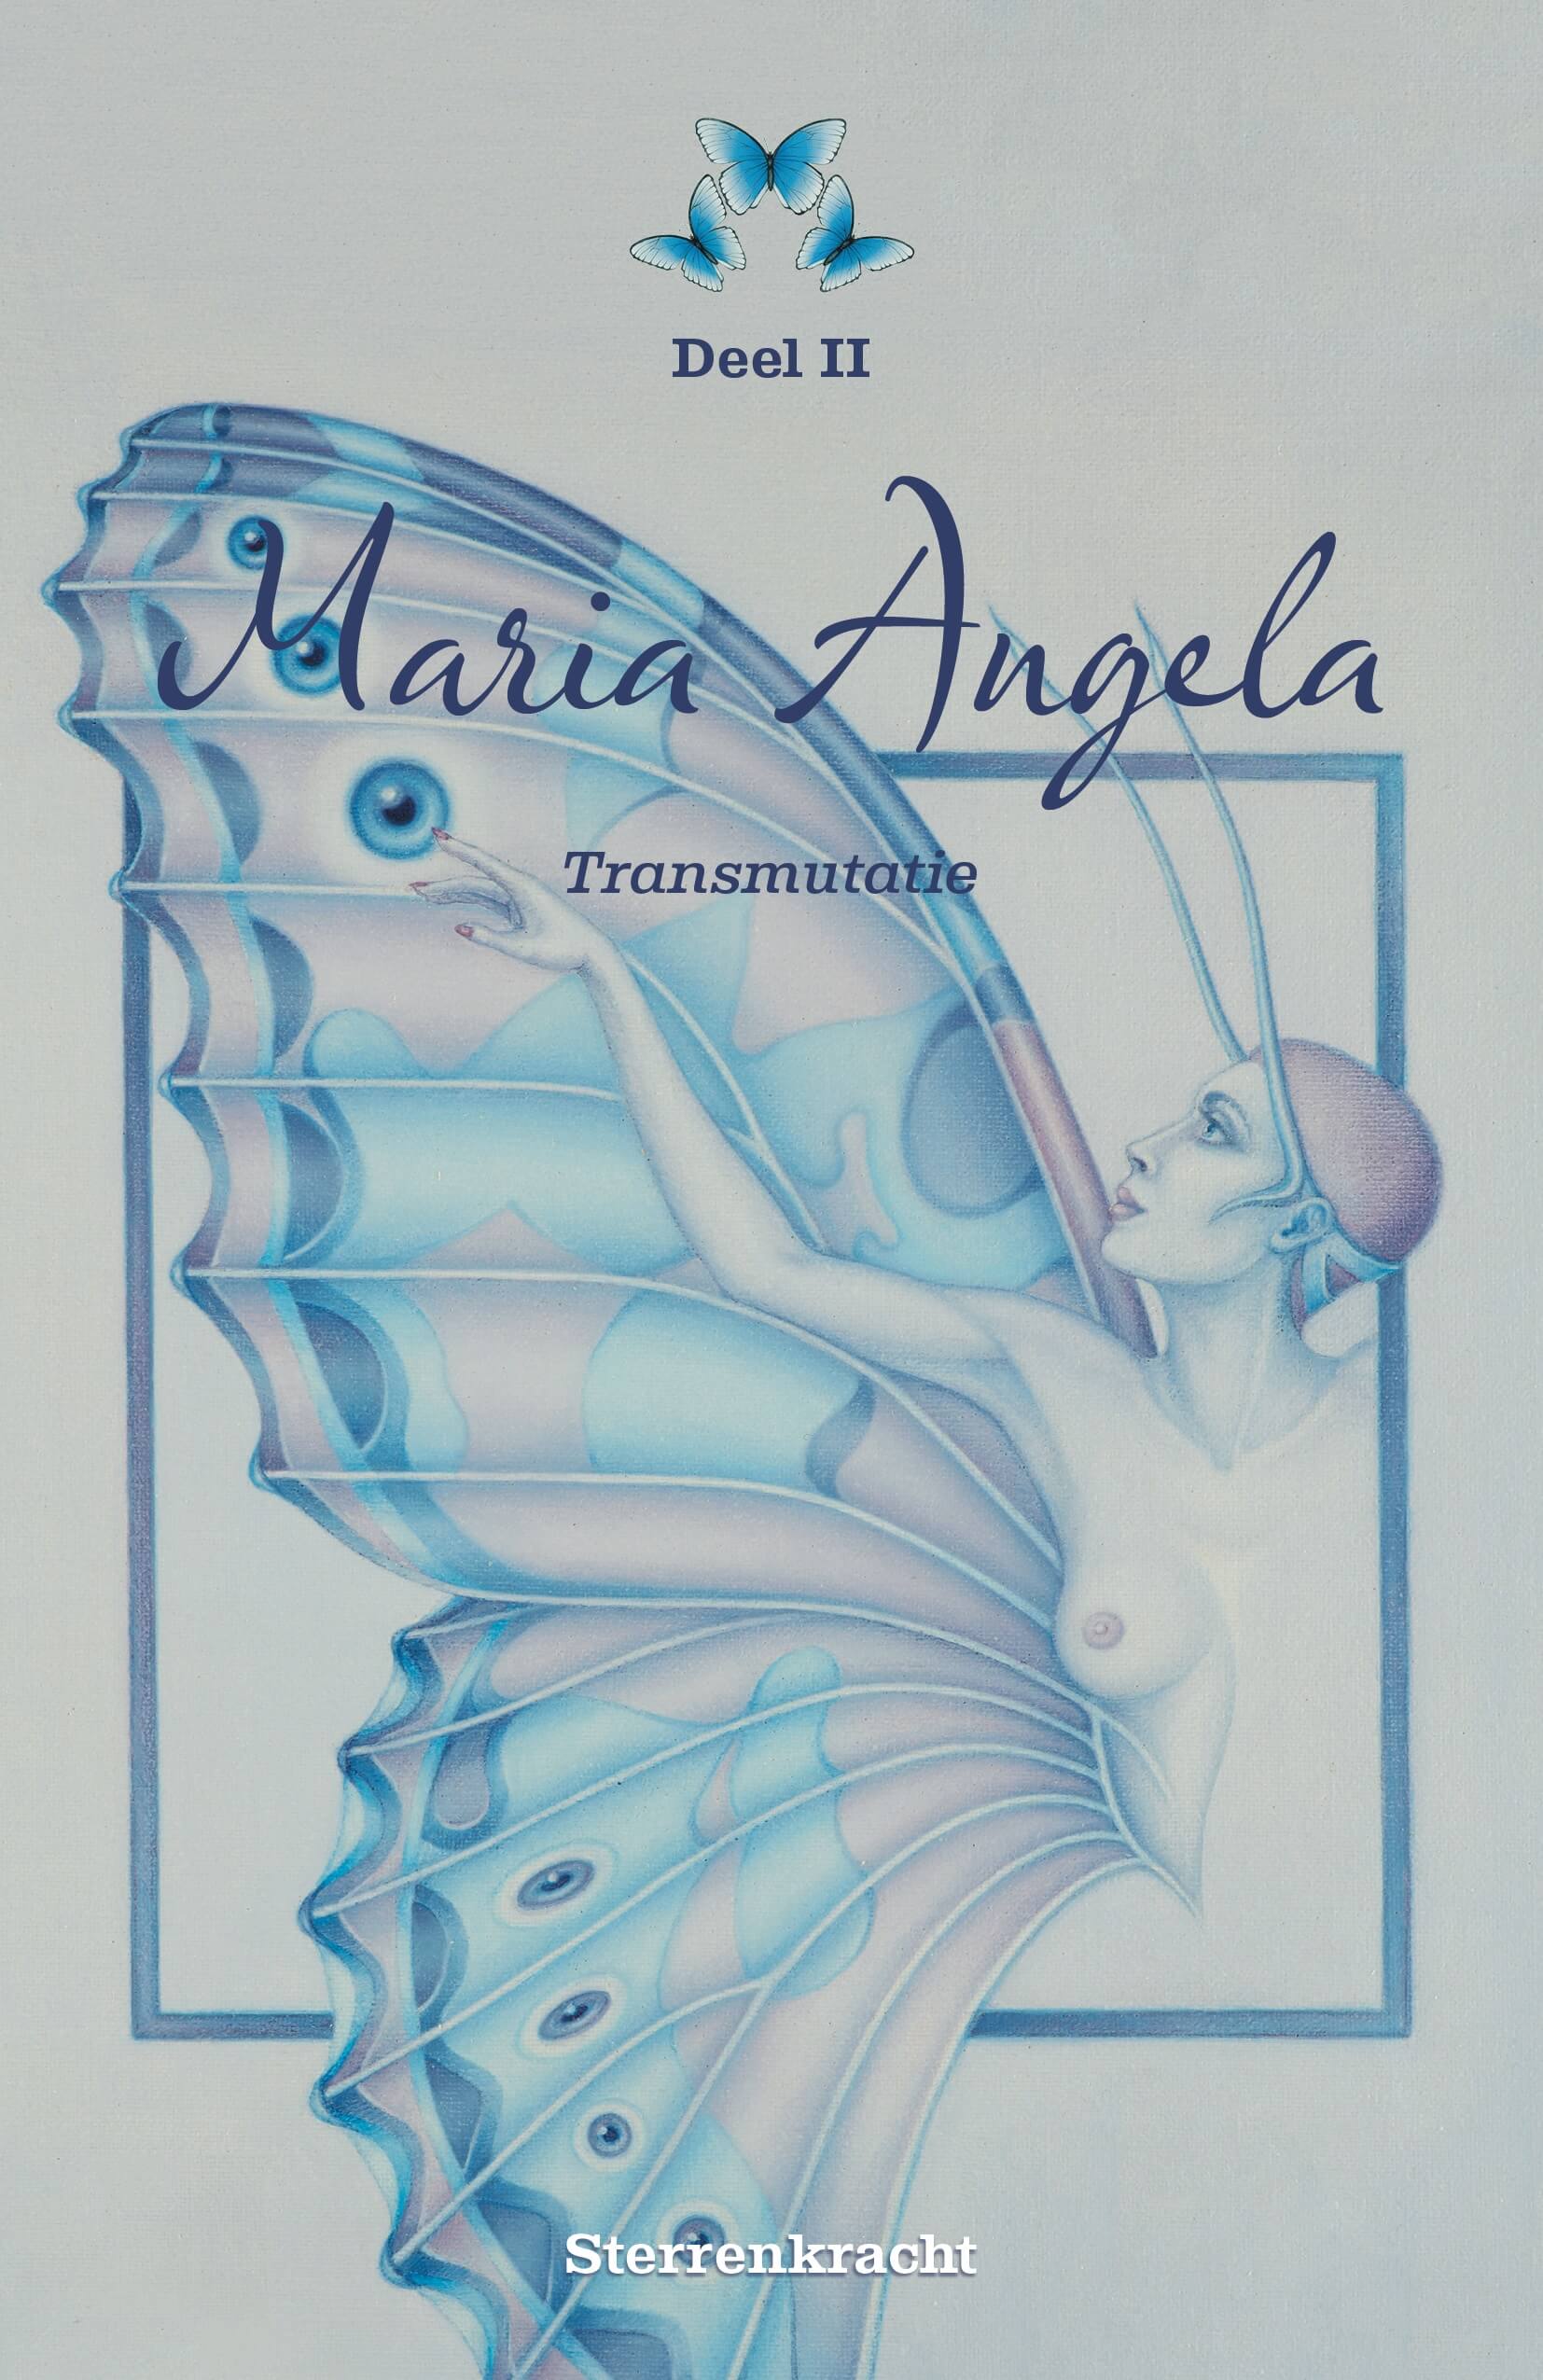 Transmutatie - Maria Angela